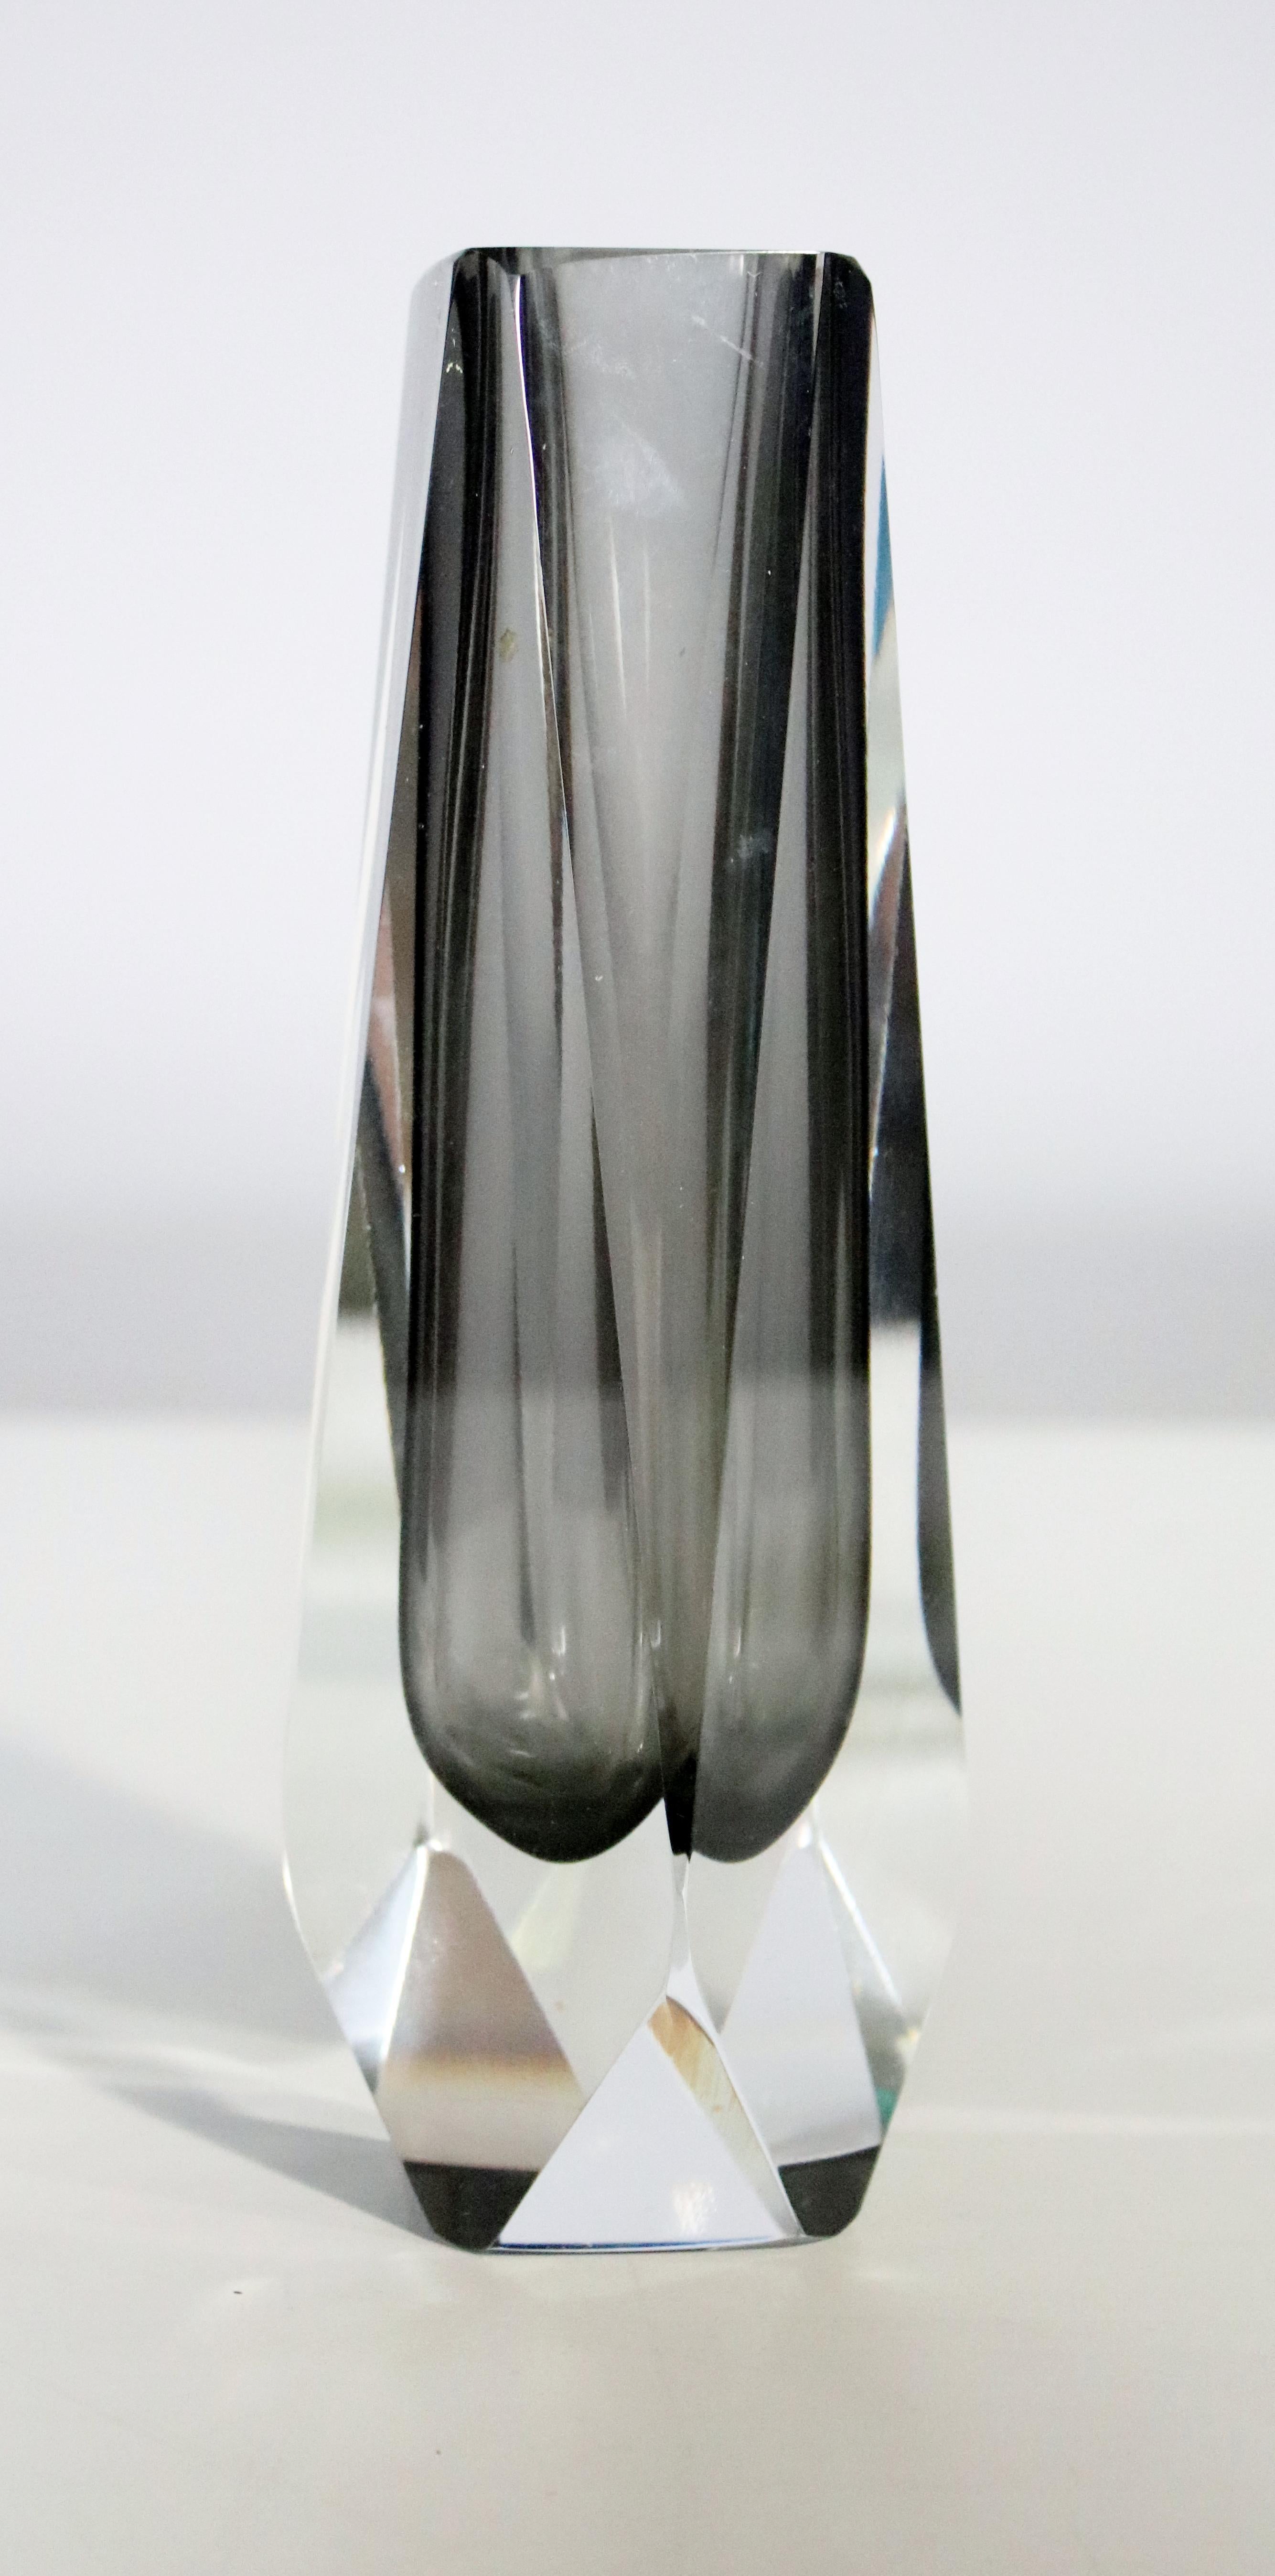 Mandruzzato Murano Faceted Art Glass Vases, Set of 3 For Sale 1